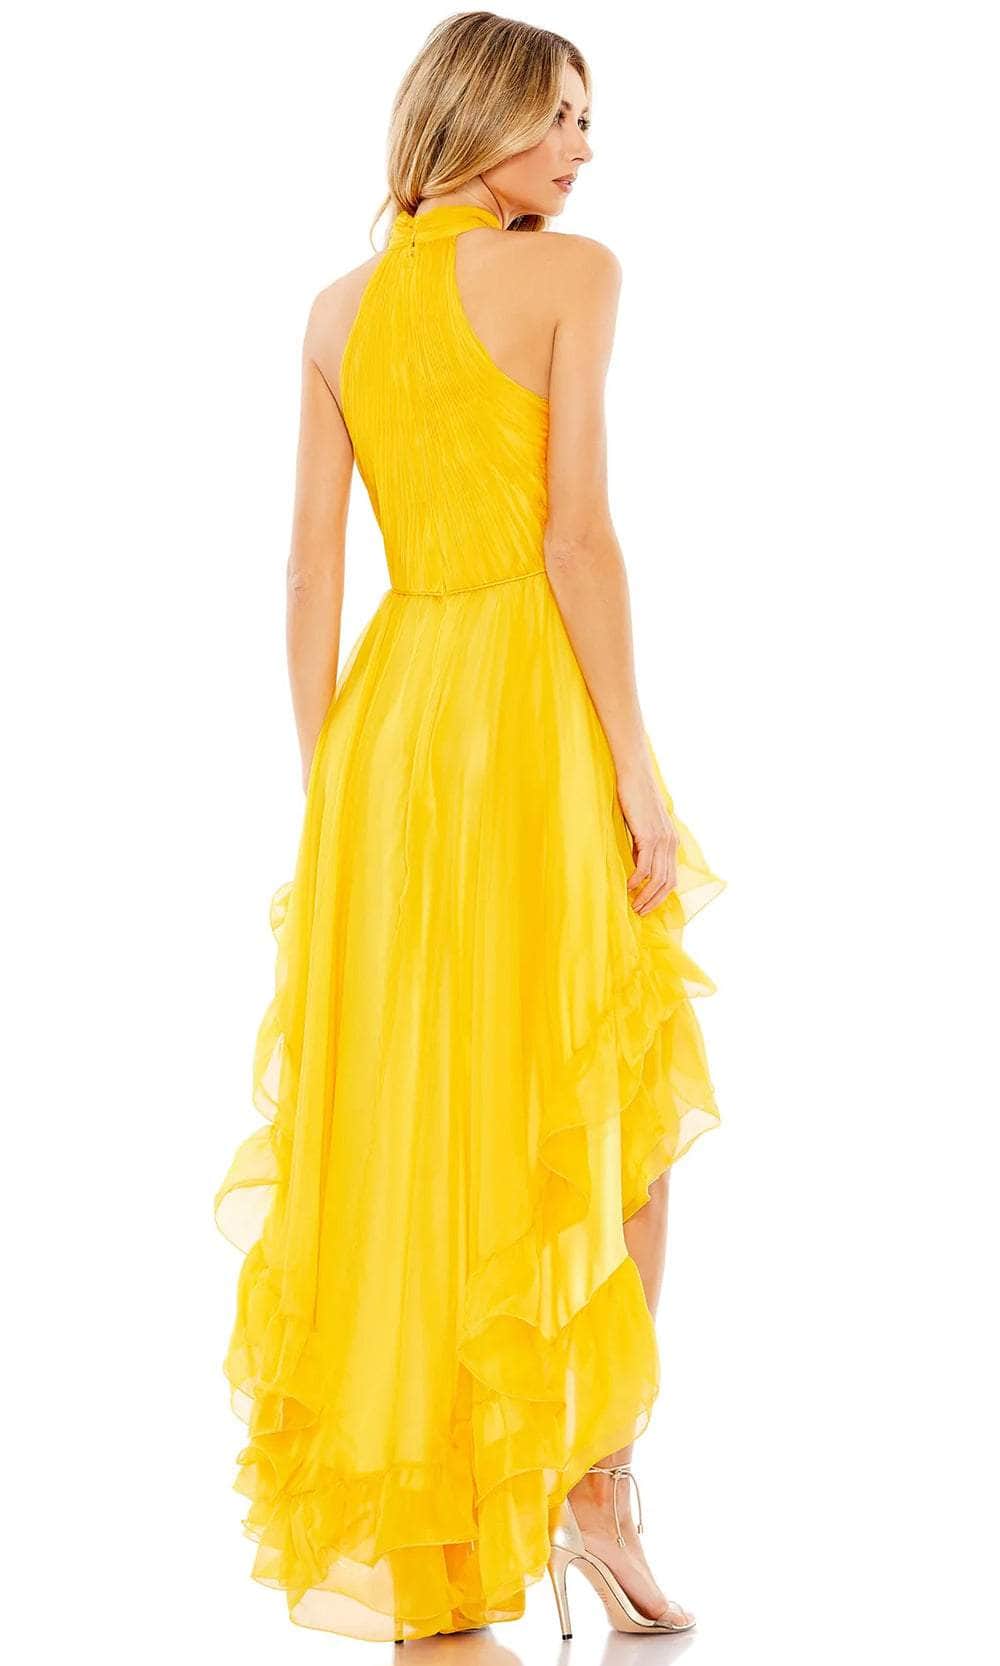 Ieena Duggal 55807 - Halter Neck High Low Prom Dress Prom Dresses